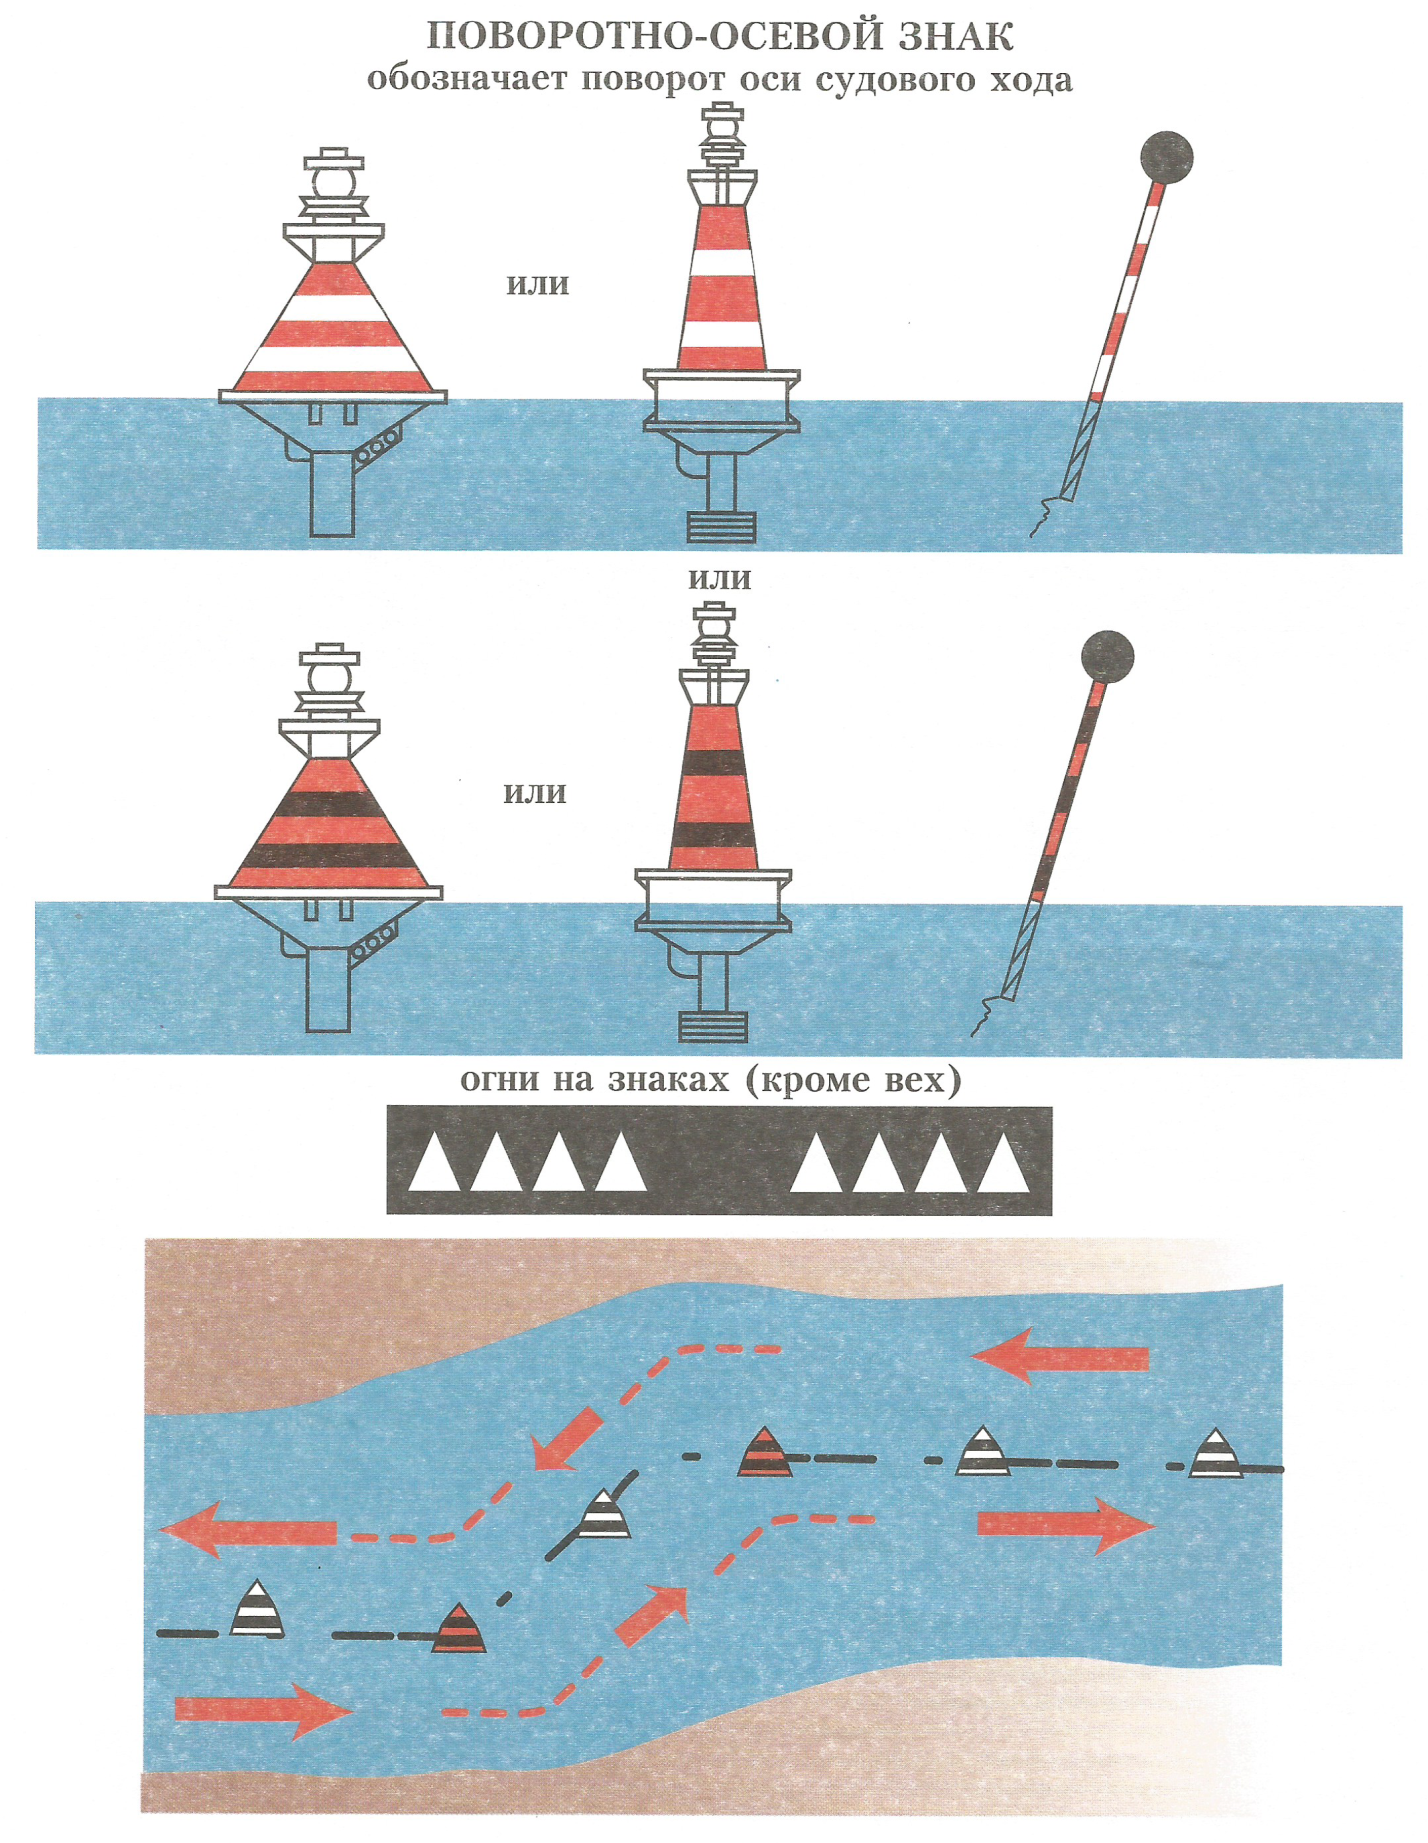 Береговые навигационные знаки. Навигационные знаки маломерные суда. Схема судового хода. Буи и знаки судового хода. Навигационные знаки на реке.